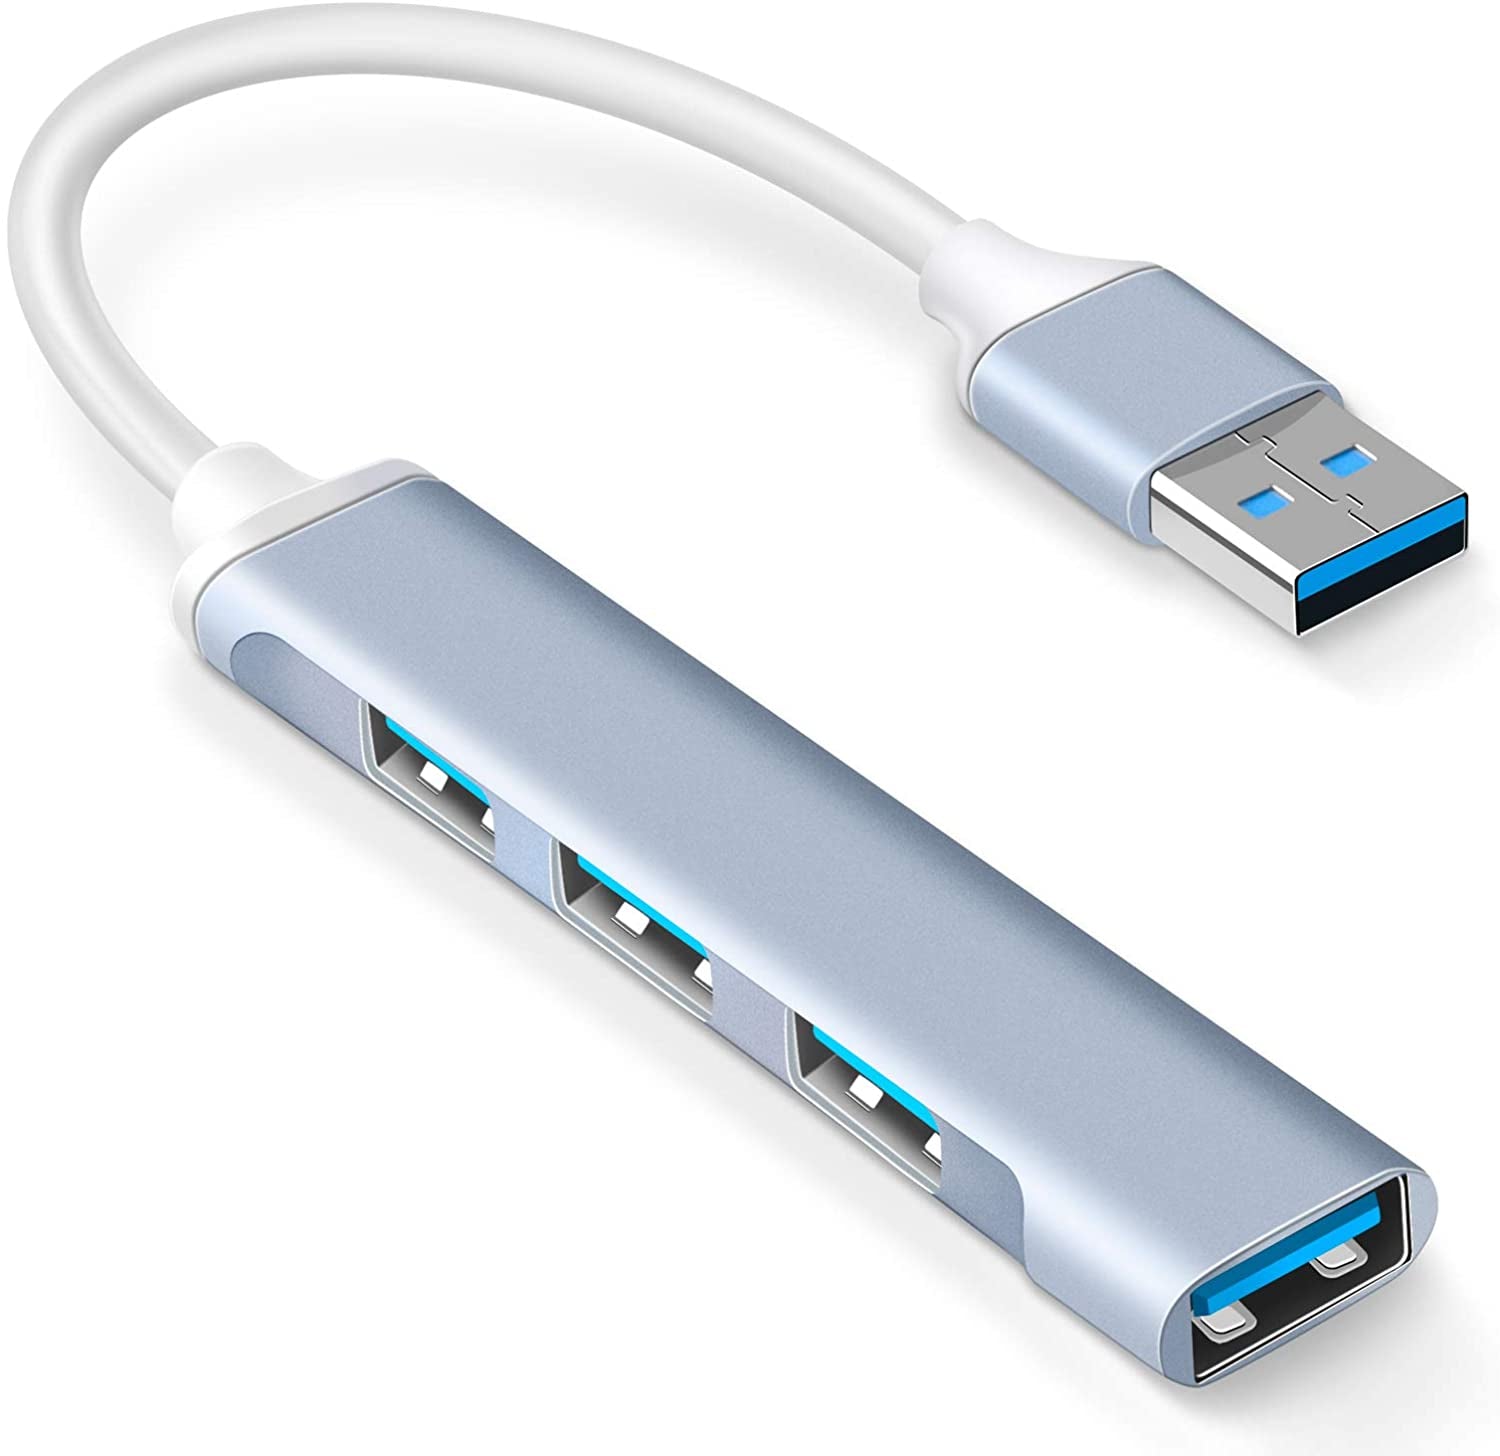 Ultra Slim Portable USB Hub Expander with 4 Port USB 3.0 and 2.0 Hub, USB Adapter Station for Laptop, iMac Pro, MacBook Air, Mac, Notebook PC - Aluminum USB Splitter